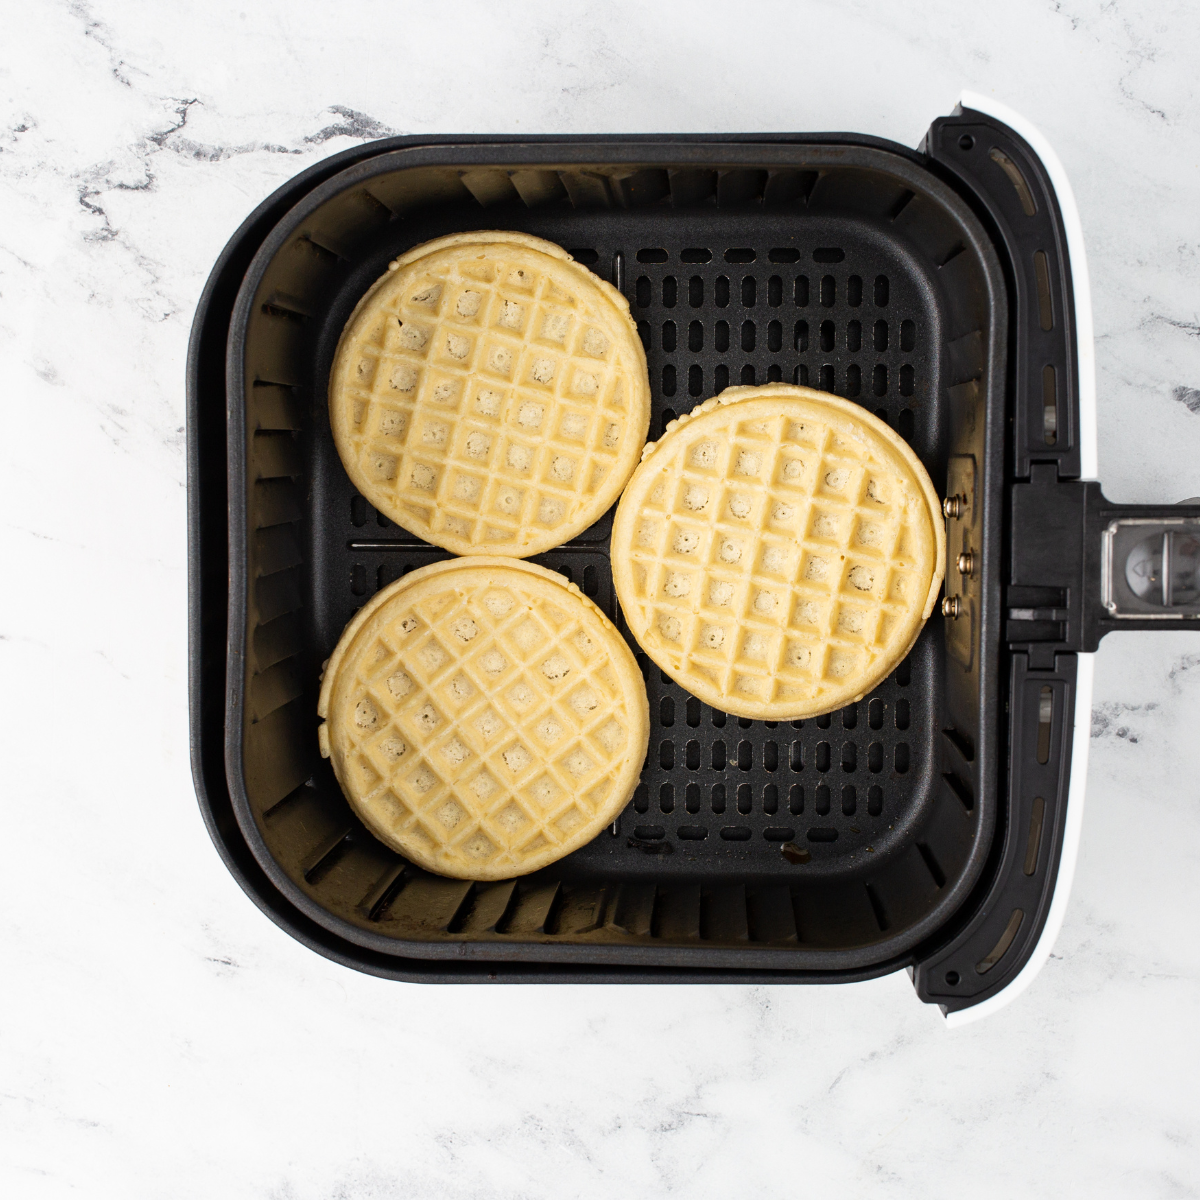 How To Cook Frozen Target Waffles In Air Fryer